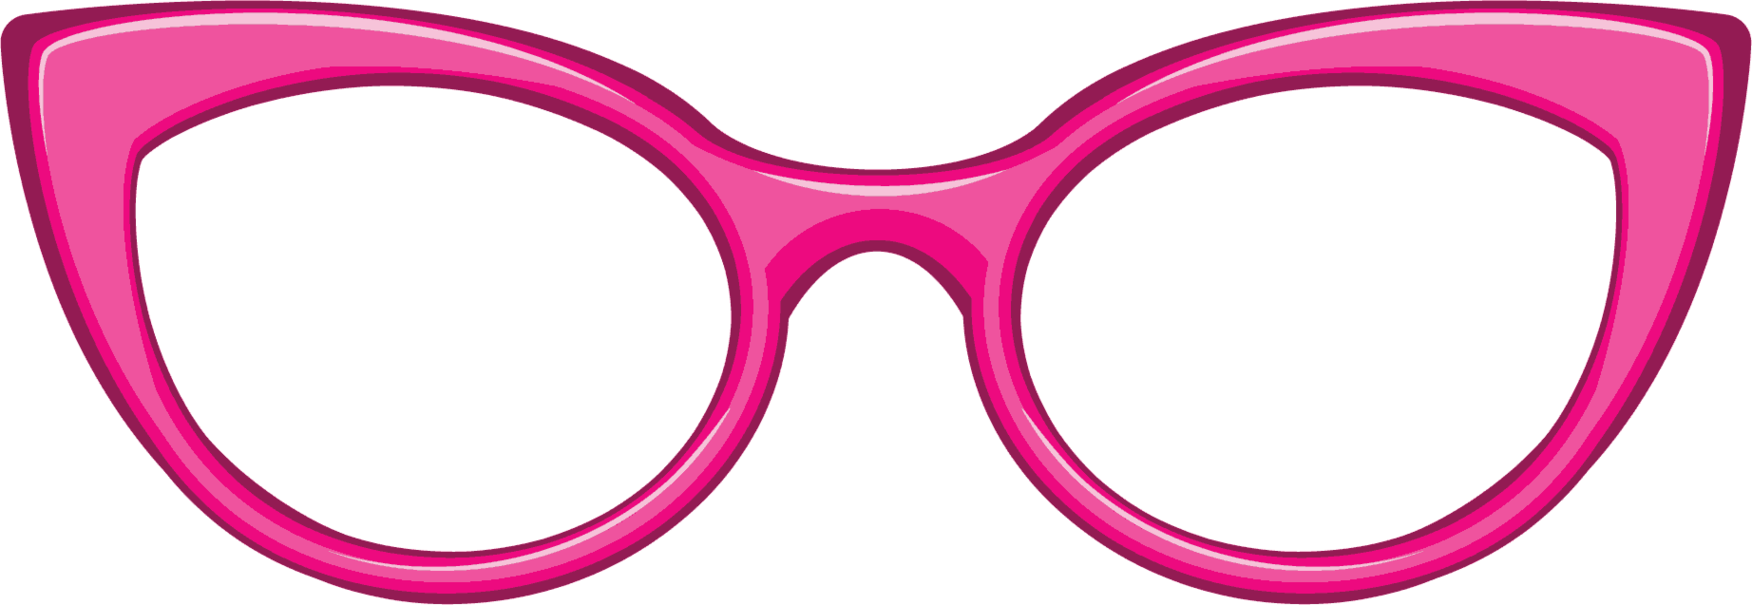 Glasses clip art clipart free download